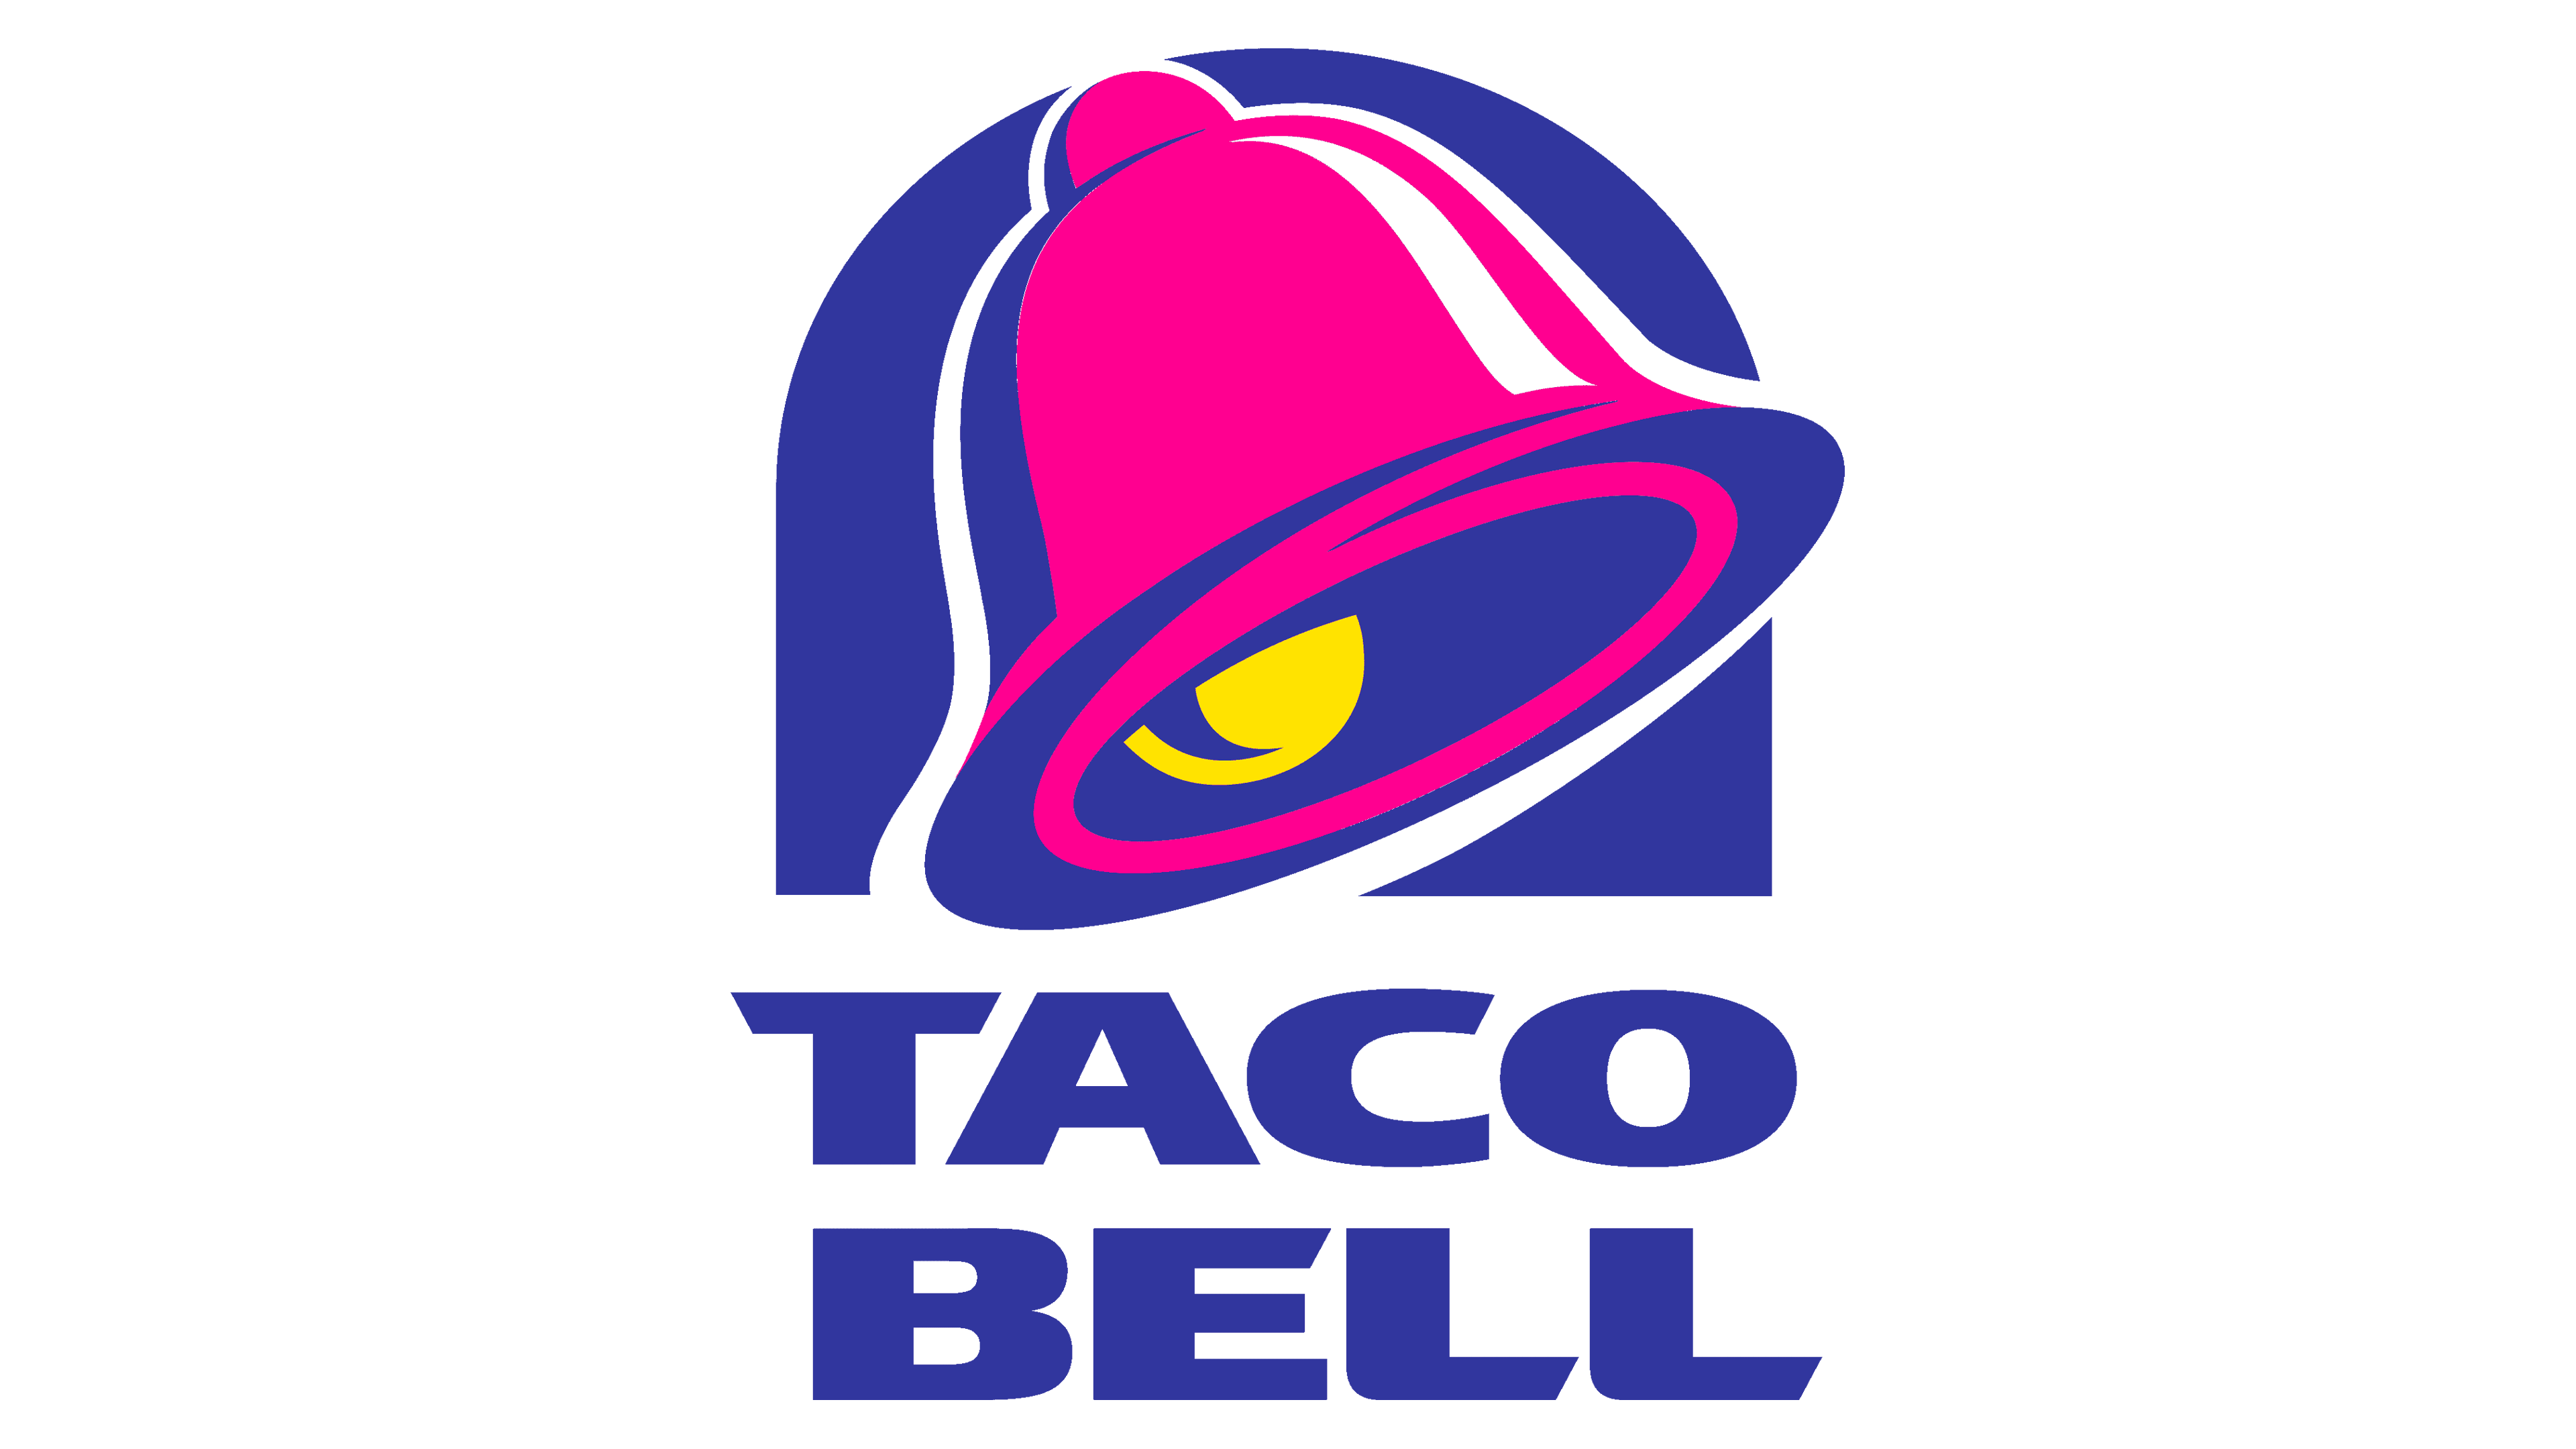 Taco Bell Logo Png Gratis Descarga De Archivos Png Pl - vrogue.co